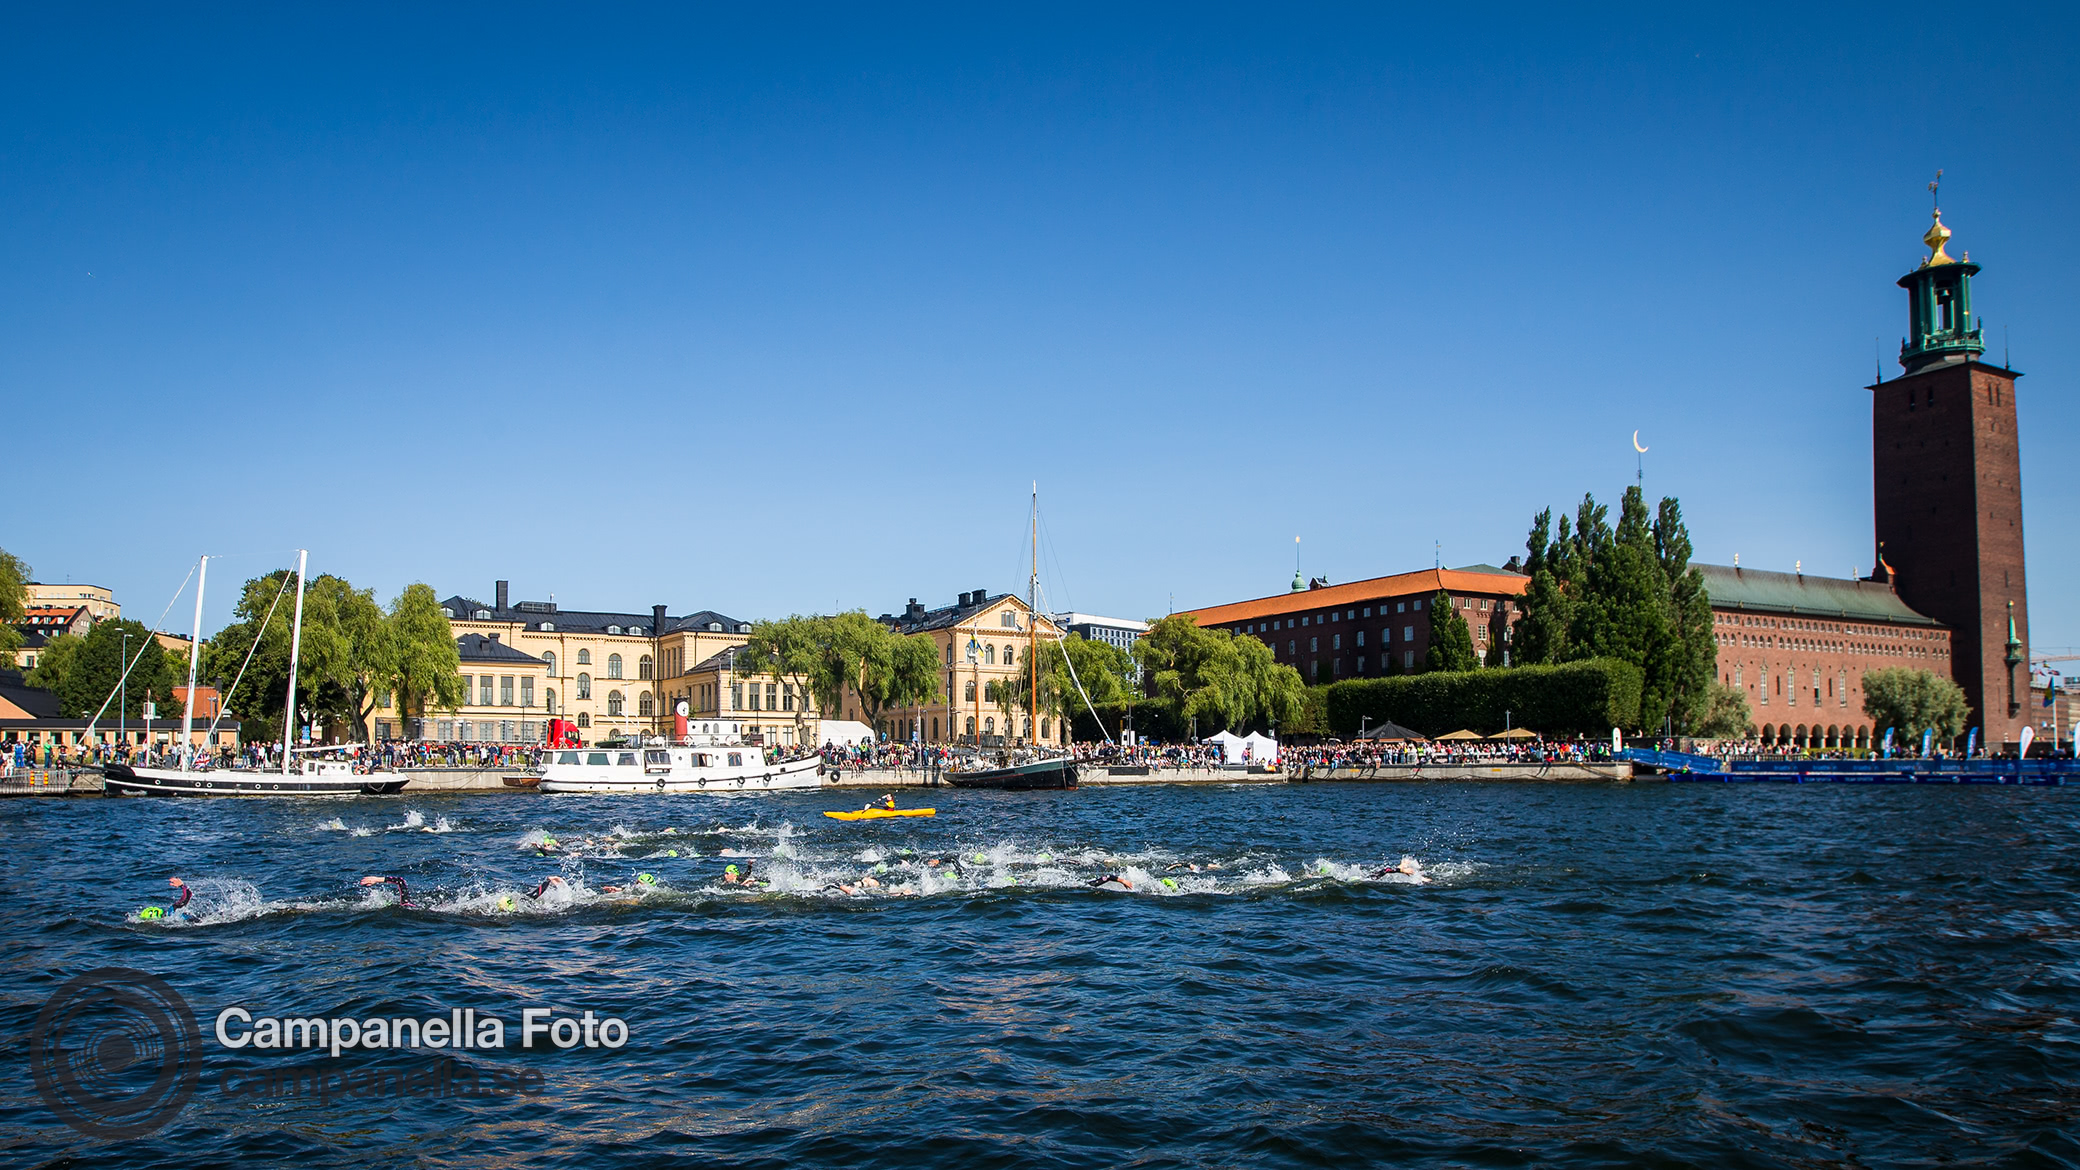 World Triathlon Series Stockholm - Michael Campanella Photography